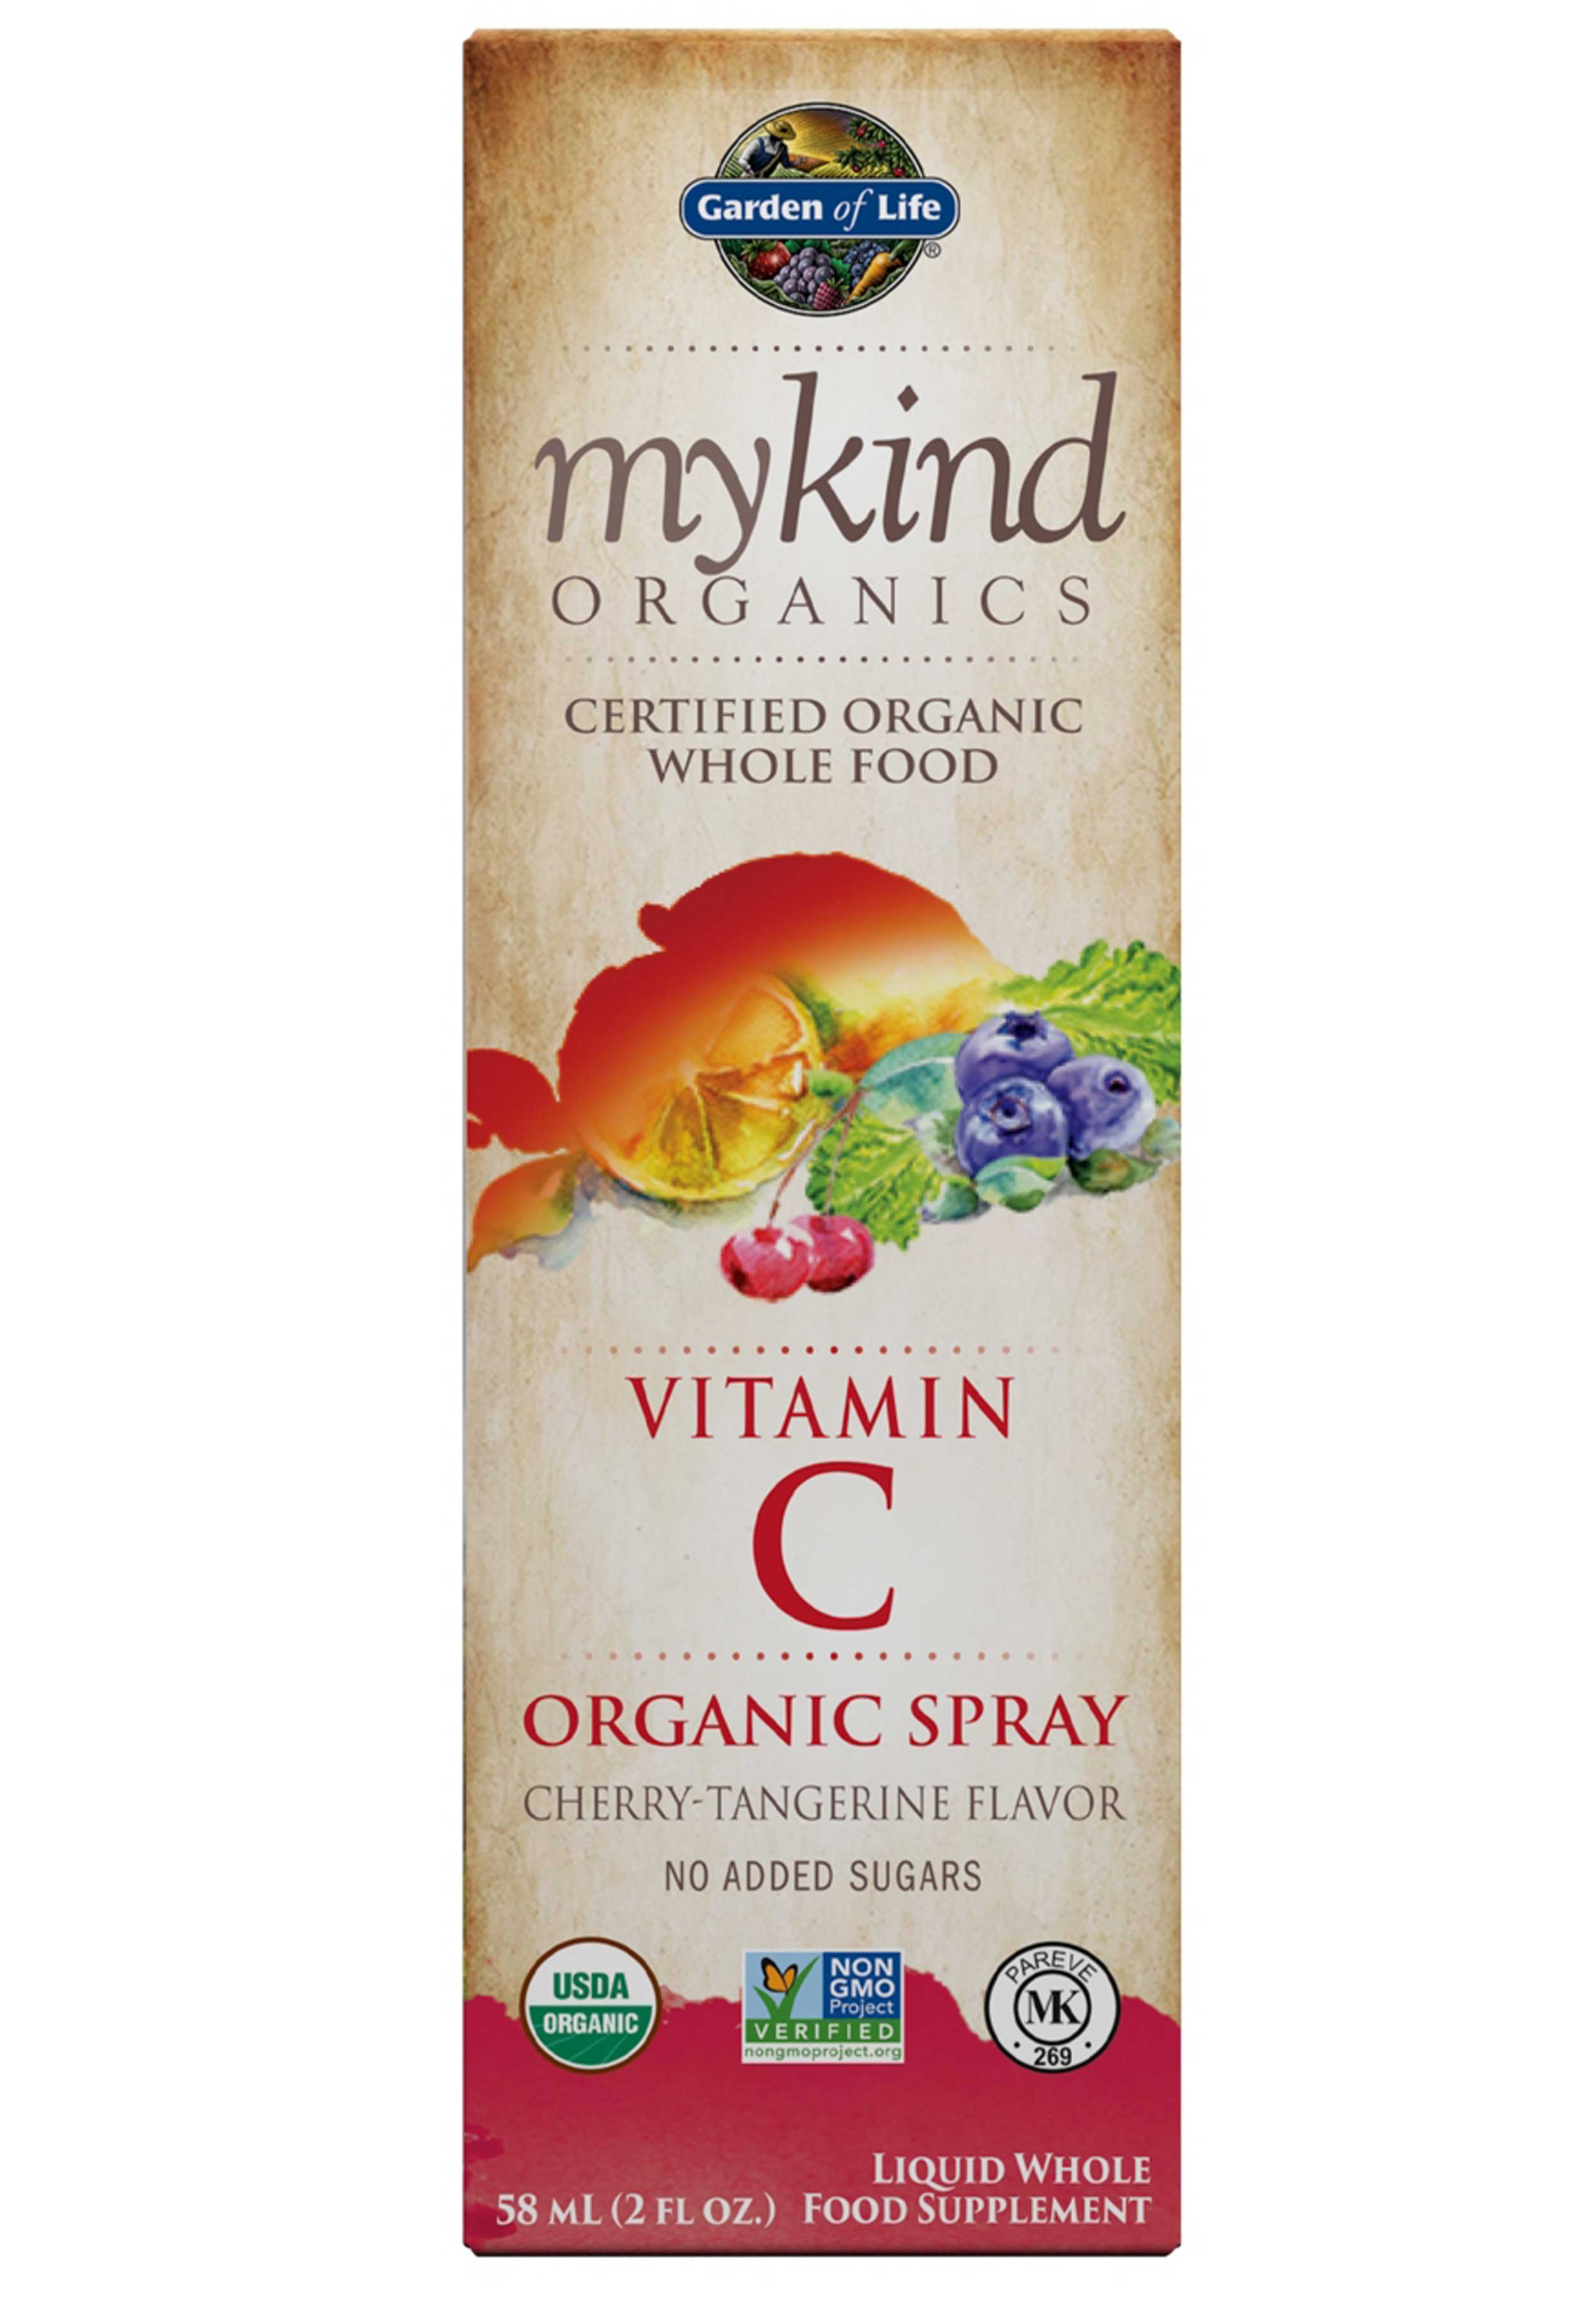 Garden of Life mykind Organics Vitamin C Organic Spray